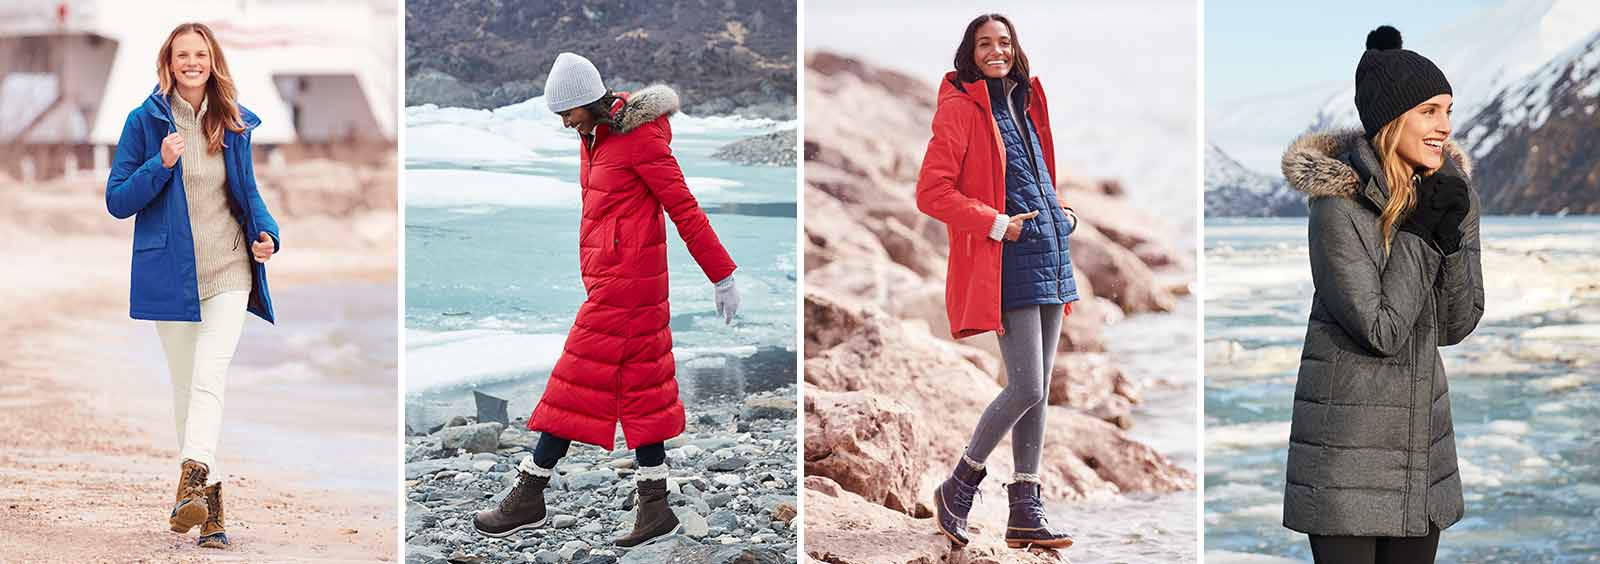 The Best Warmest Winter Coats for Women at Lands' End